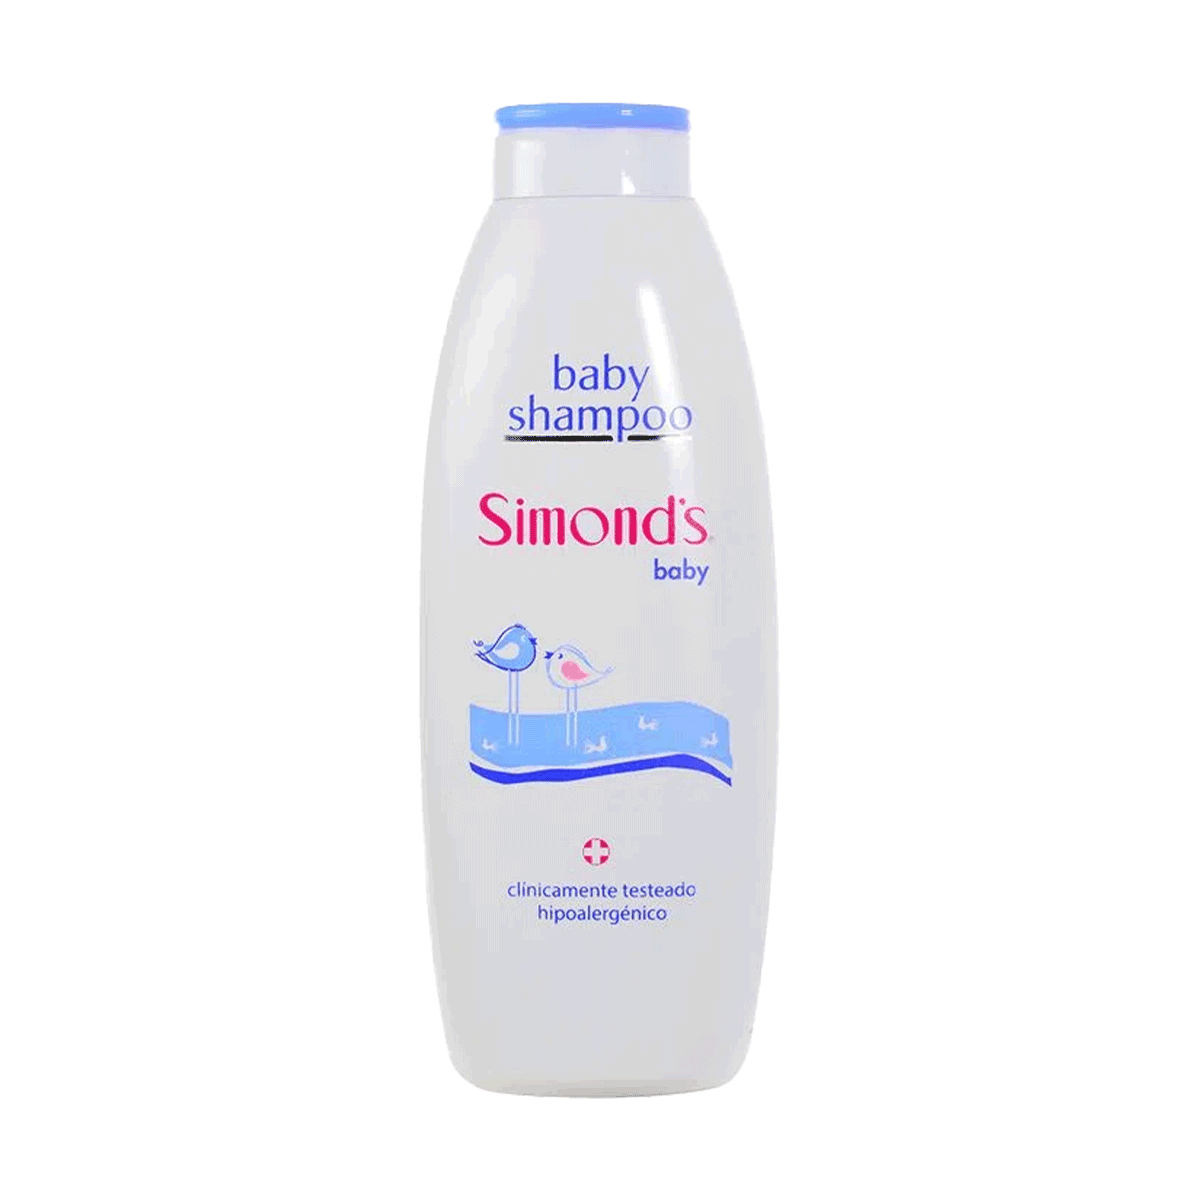 Shampoo baby Simonds 400 ml